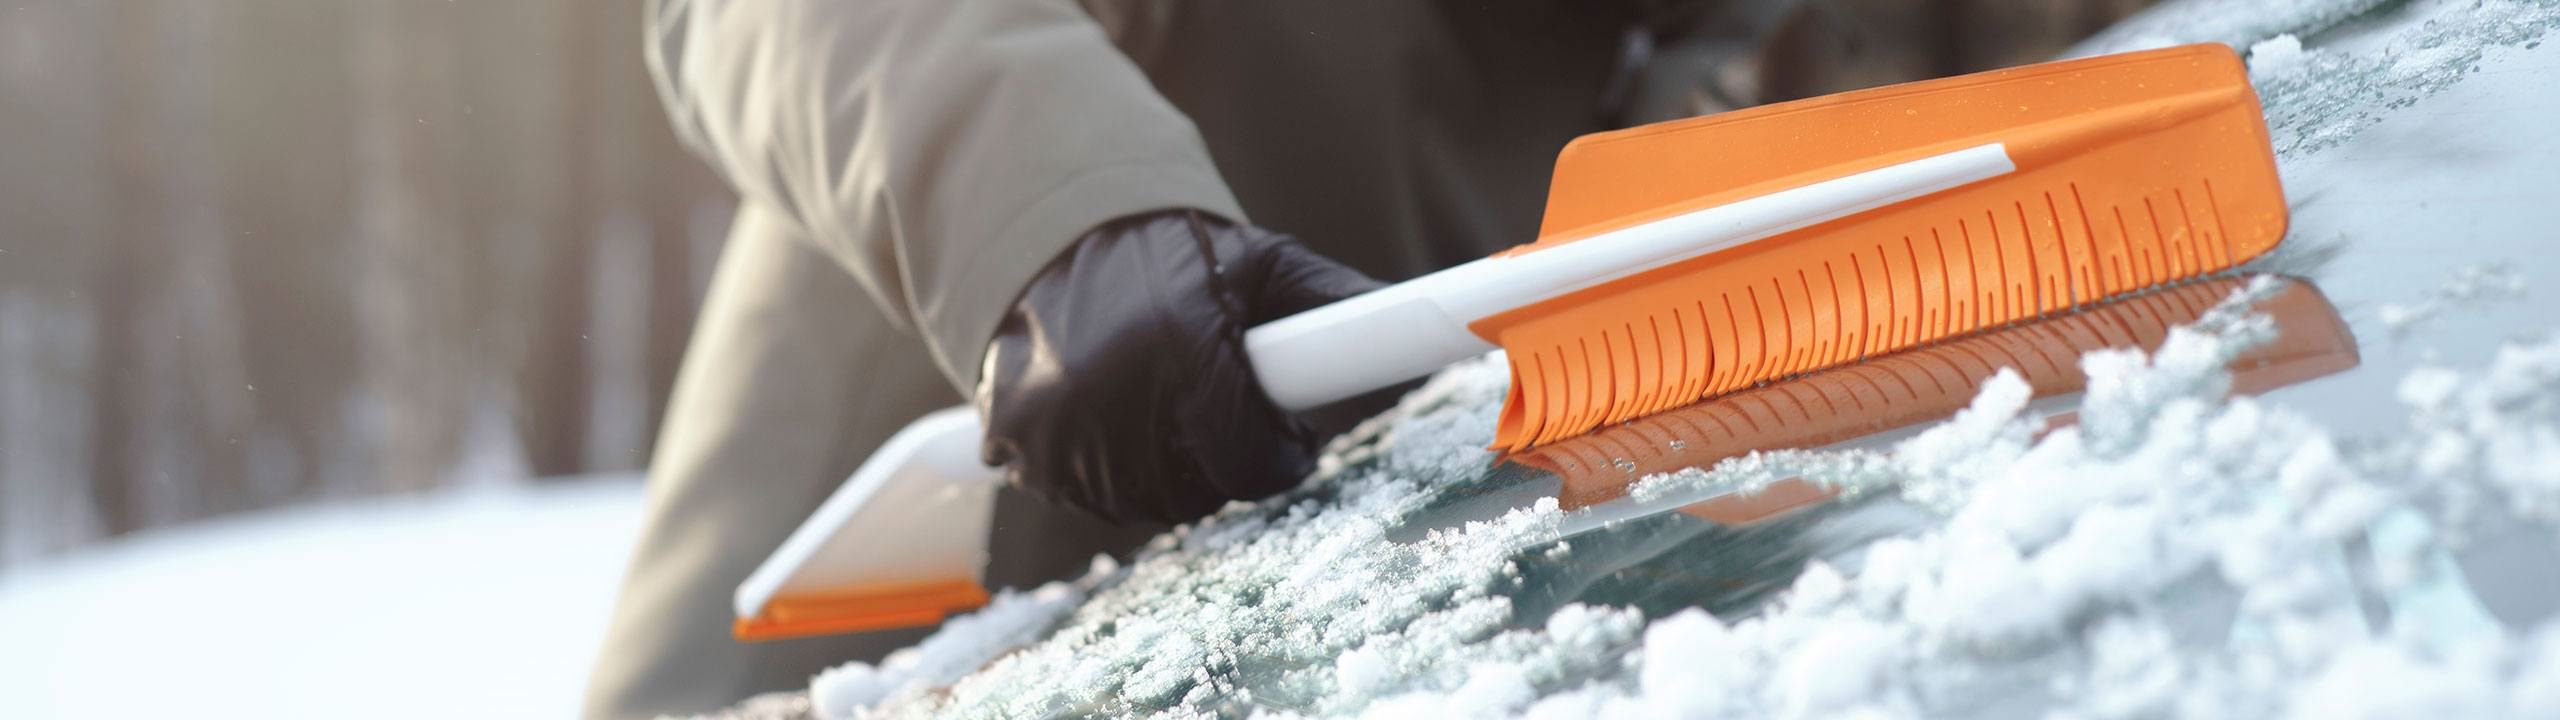  Fiskars Auto Ice Scraper, Usable on Both Sides, Length: 21.5  cm, Plastic, Black/Orange, Solid, 1019354 : Patio, Lawn & Garden